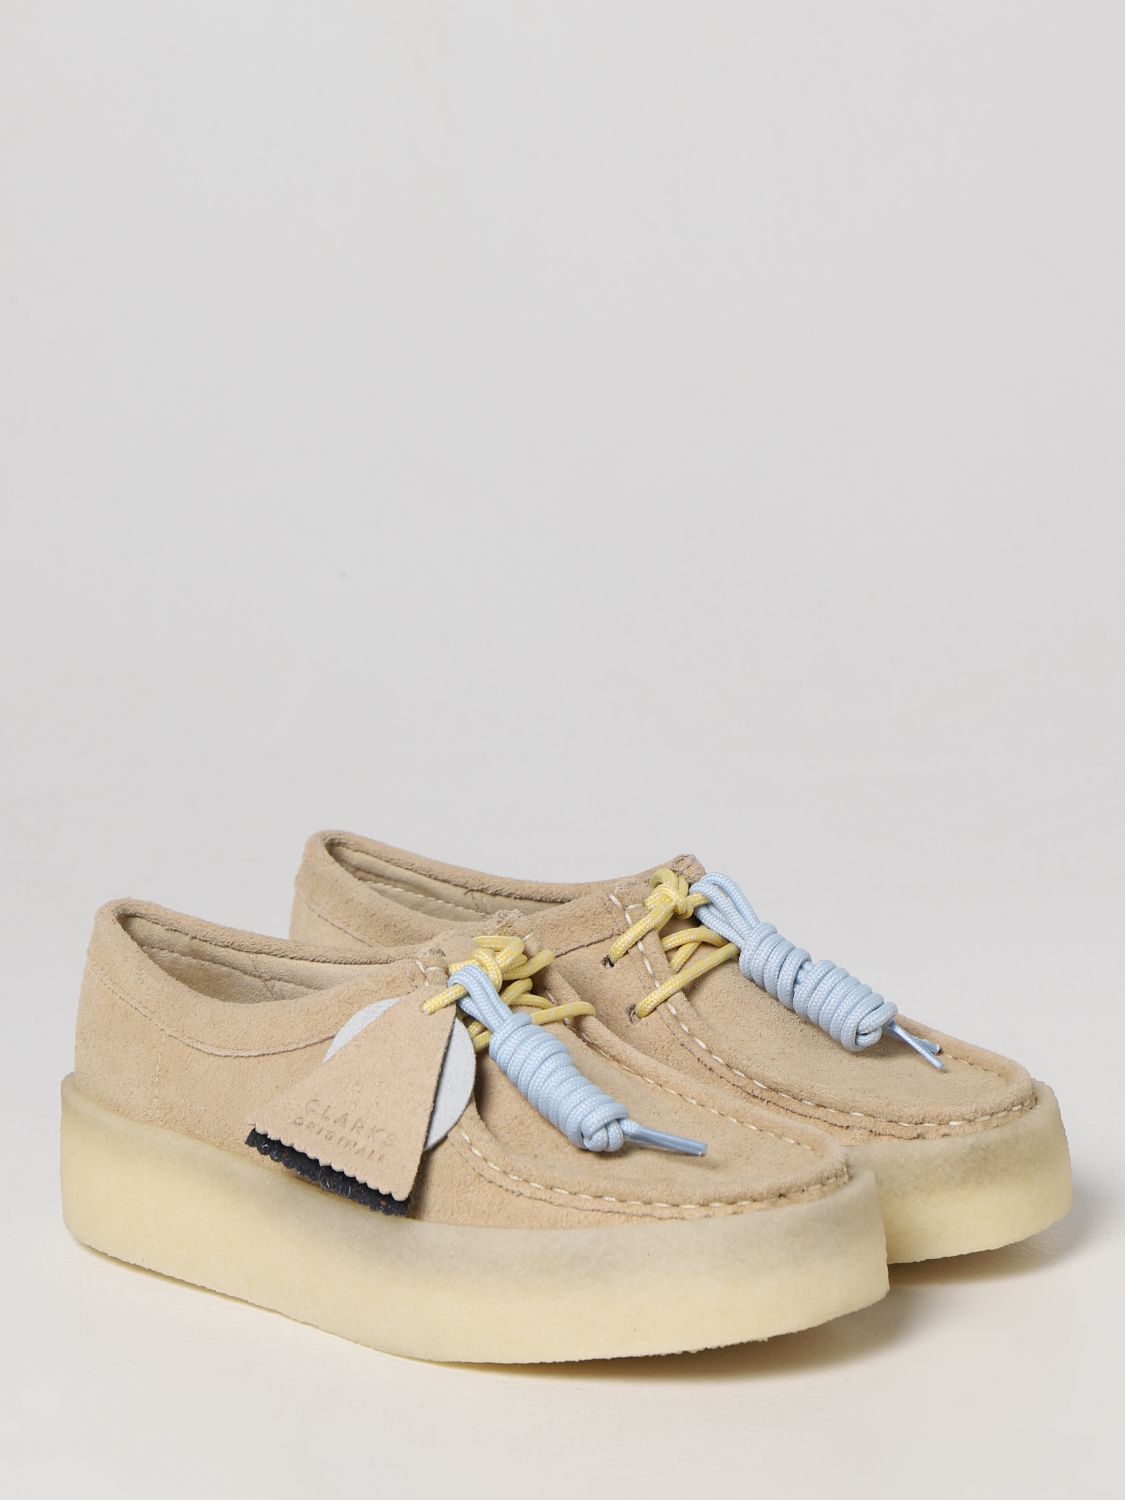 CLARKS ORIGINALS: oxford for woman - | Clarks Originals shoes 26171855 online on GIGLIO.COM